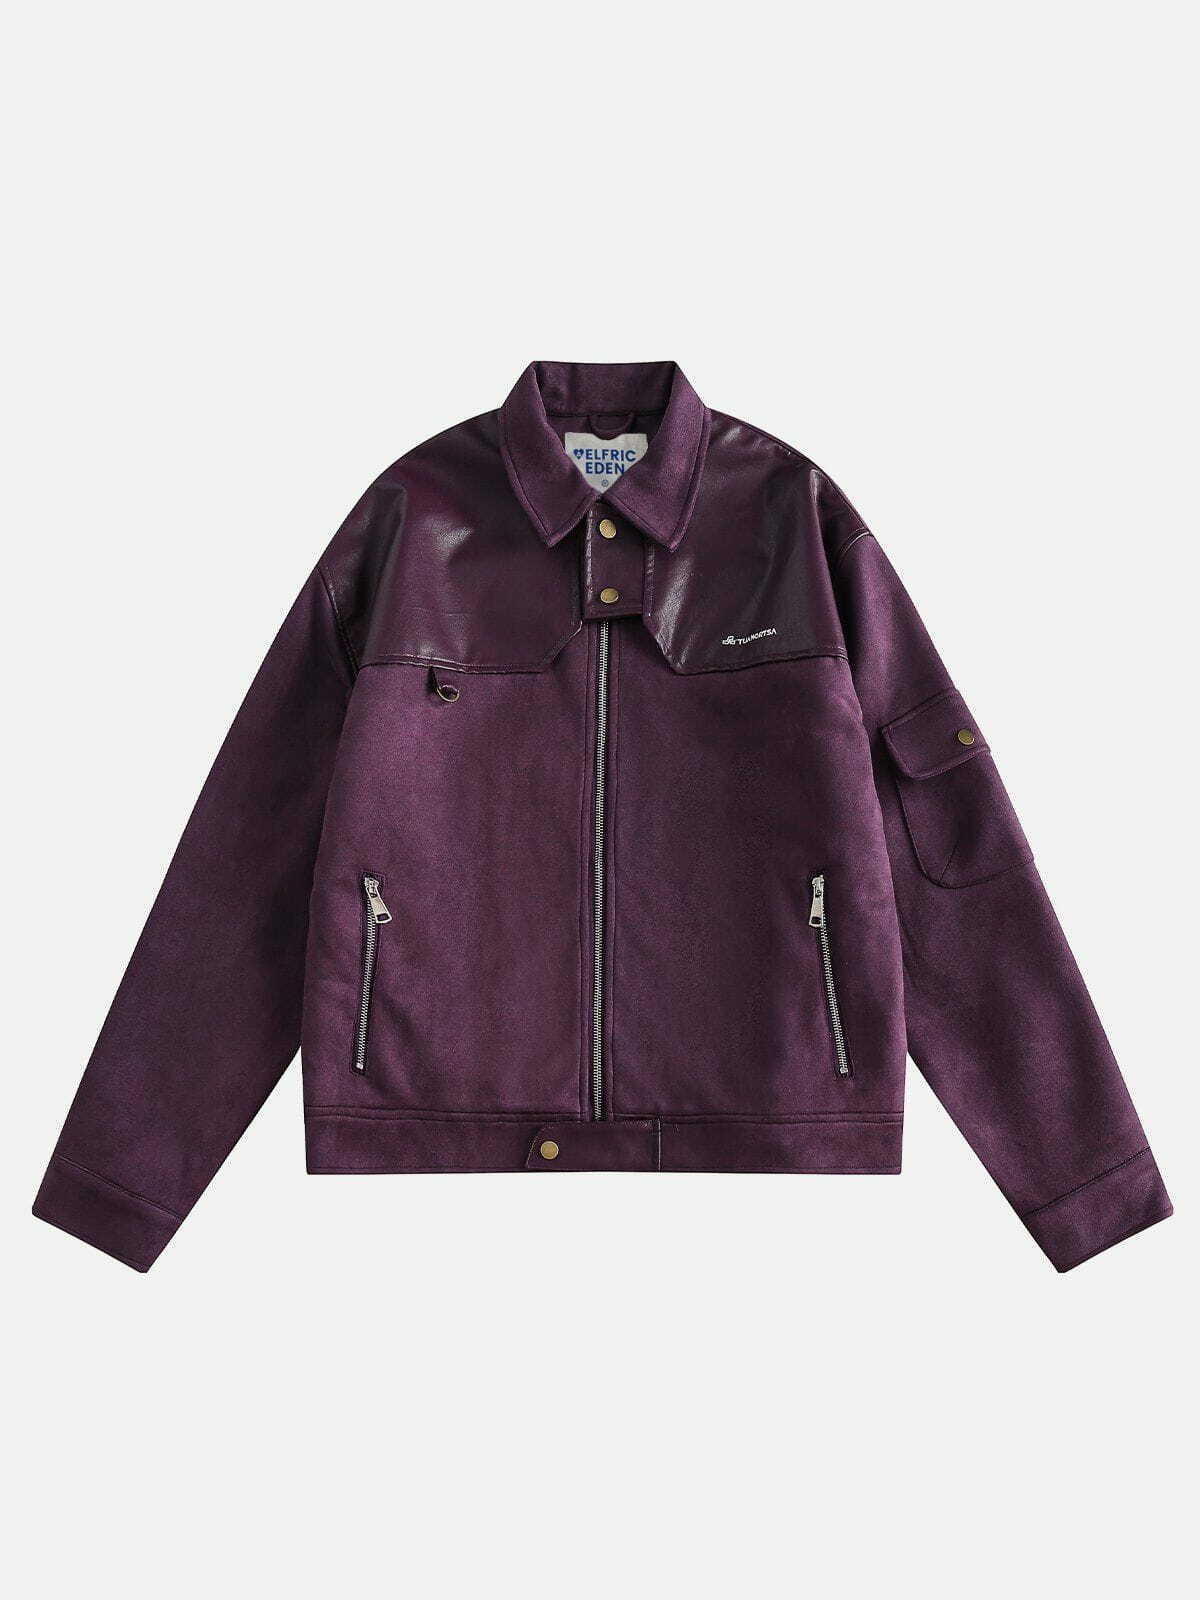 retro faux leather jacket edgy & vintage streetwear 2194